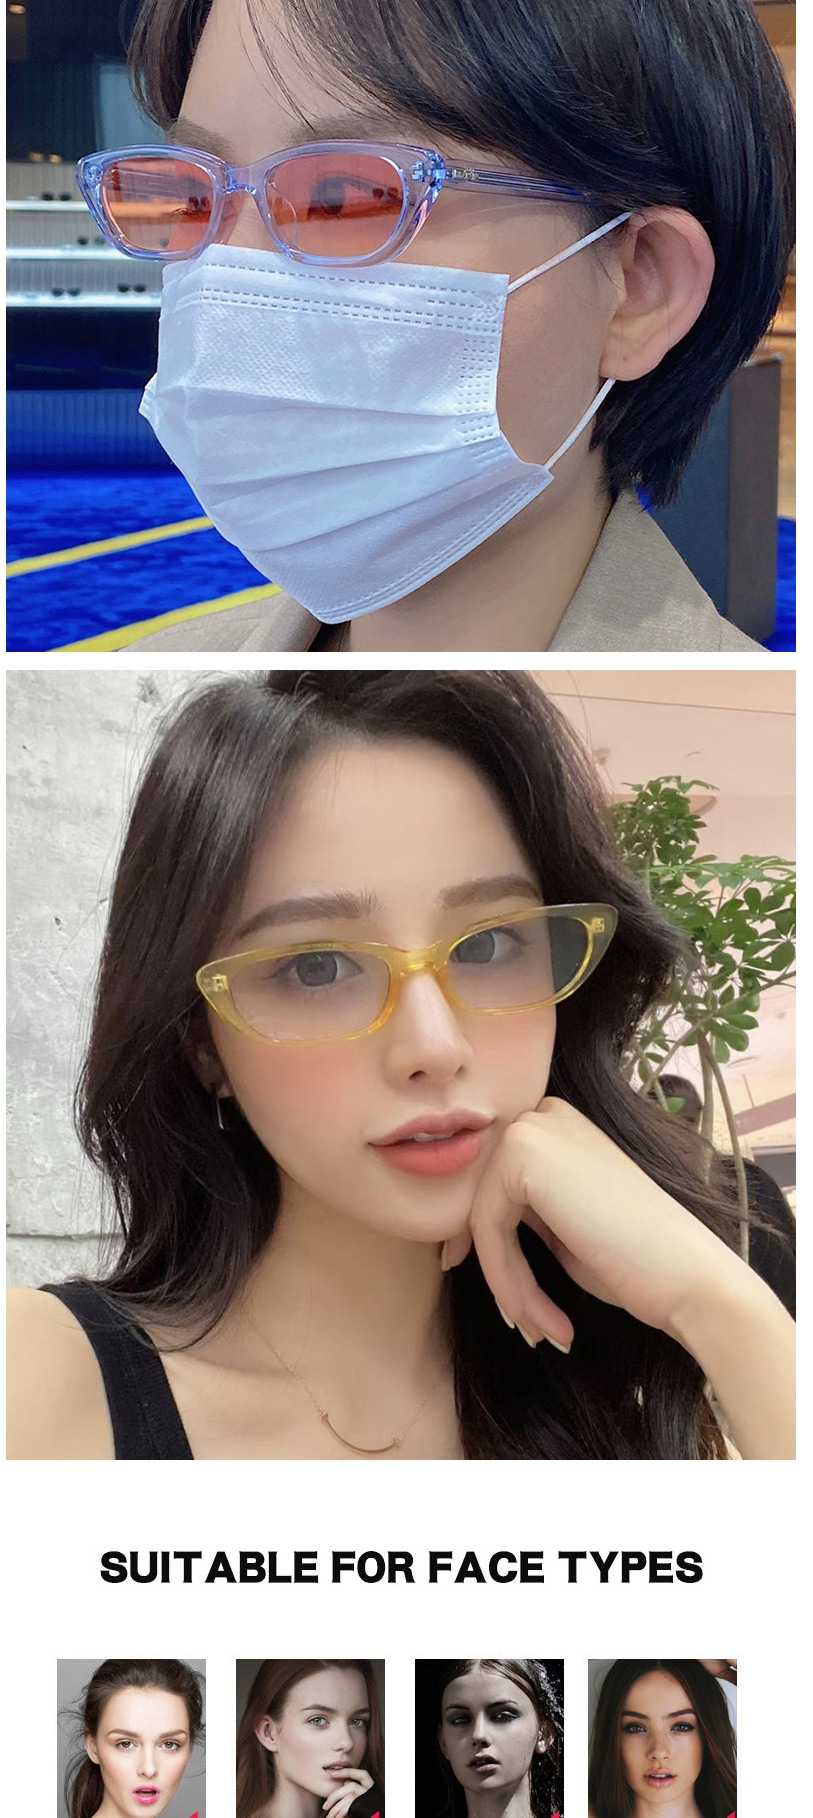 Fashion Transparent Yellow Frame Double Gray Small Frame Sunglasses,Women Sunglasses